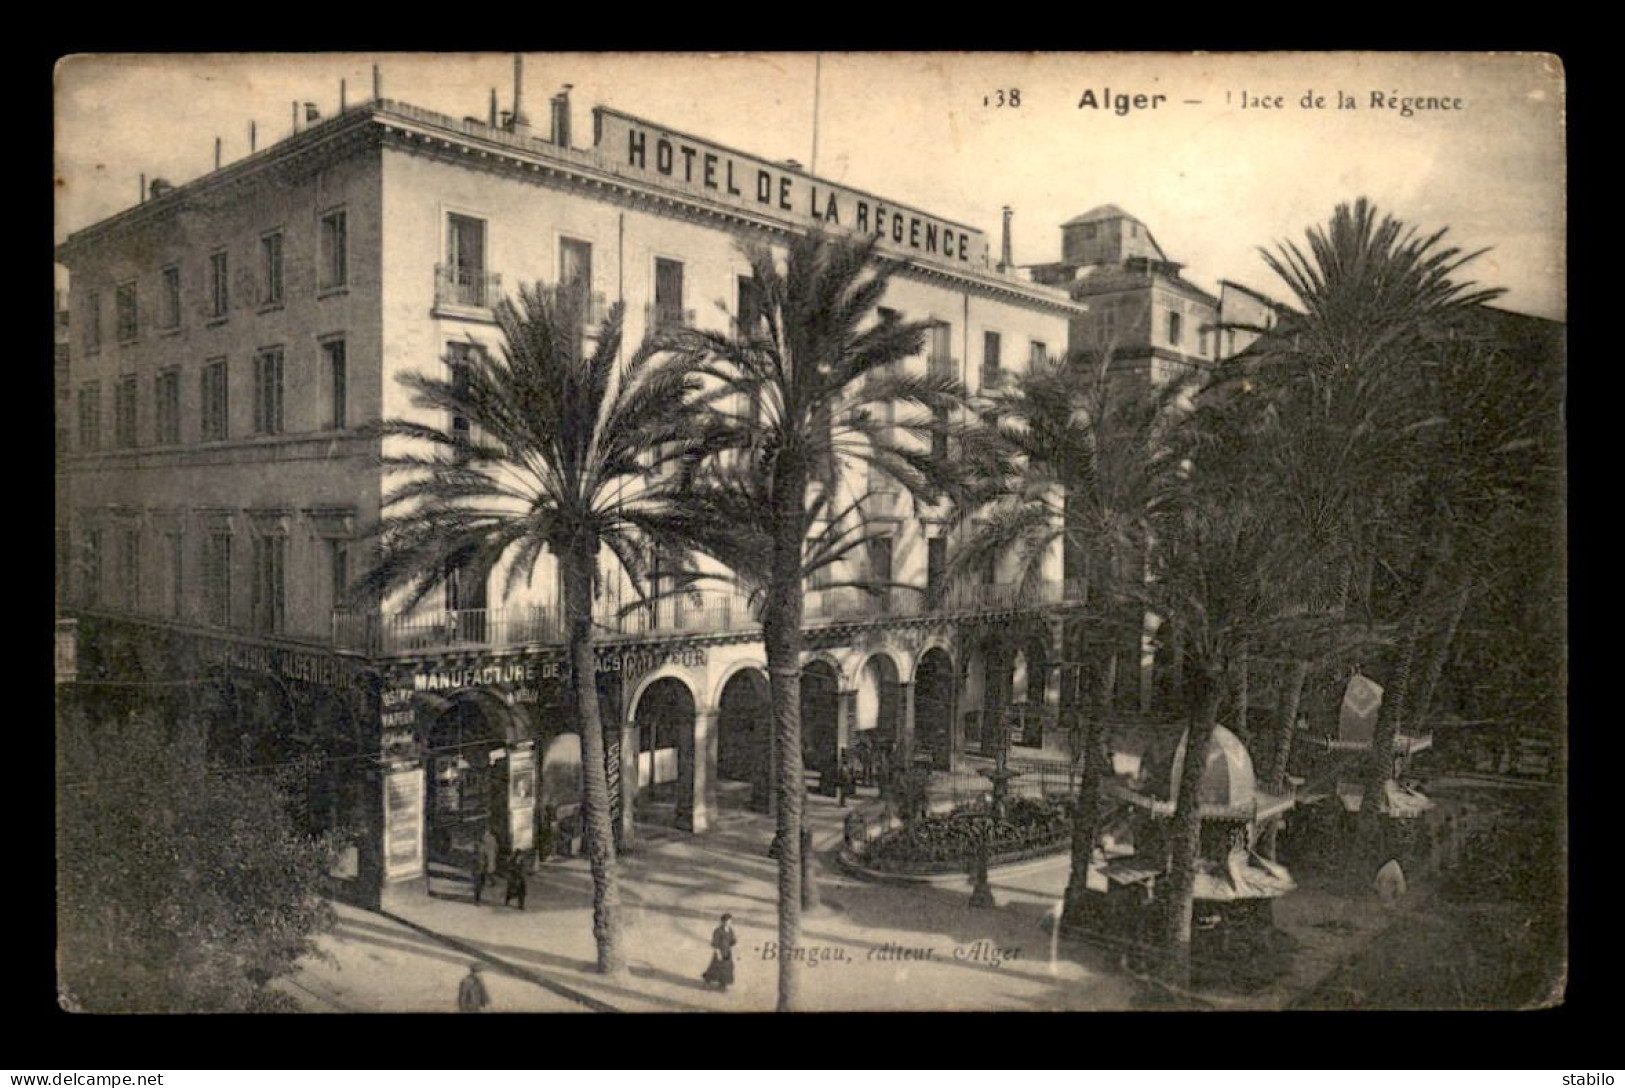 ALGERIE - ALGER - PLACE DE LA REGENCE - HOTEL DE LA REGENCE - TABAC M. MELIA - Alger